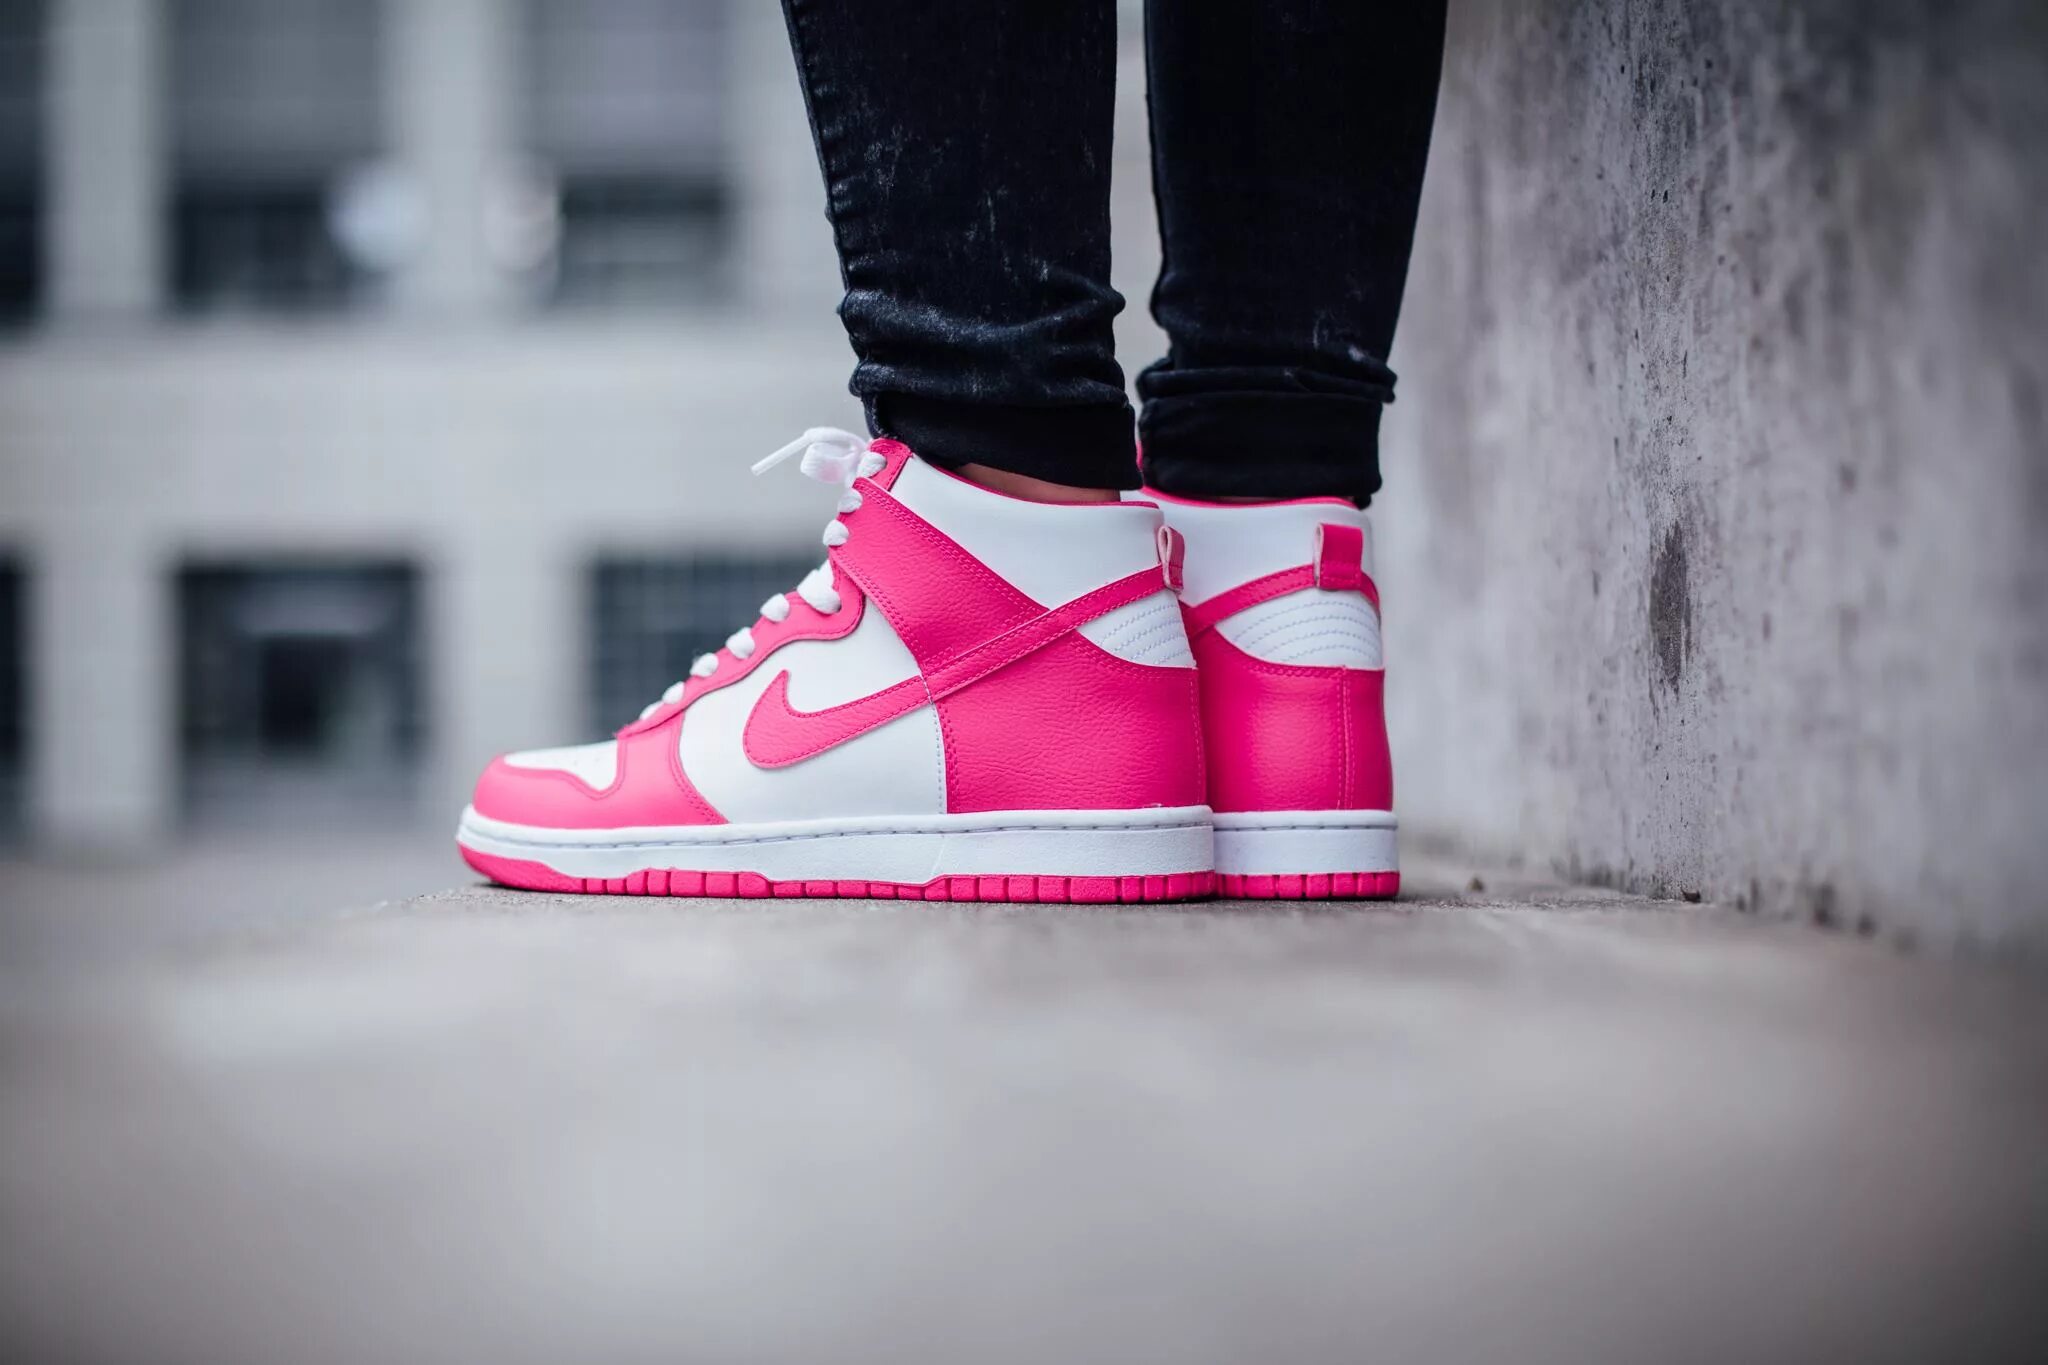 Nike dunk розовые. Nike Dunk Prime Pink. Nike Dunk High Pink. Nike Dunk High Pink Prime. Nike SB Dunk High Pink.